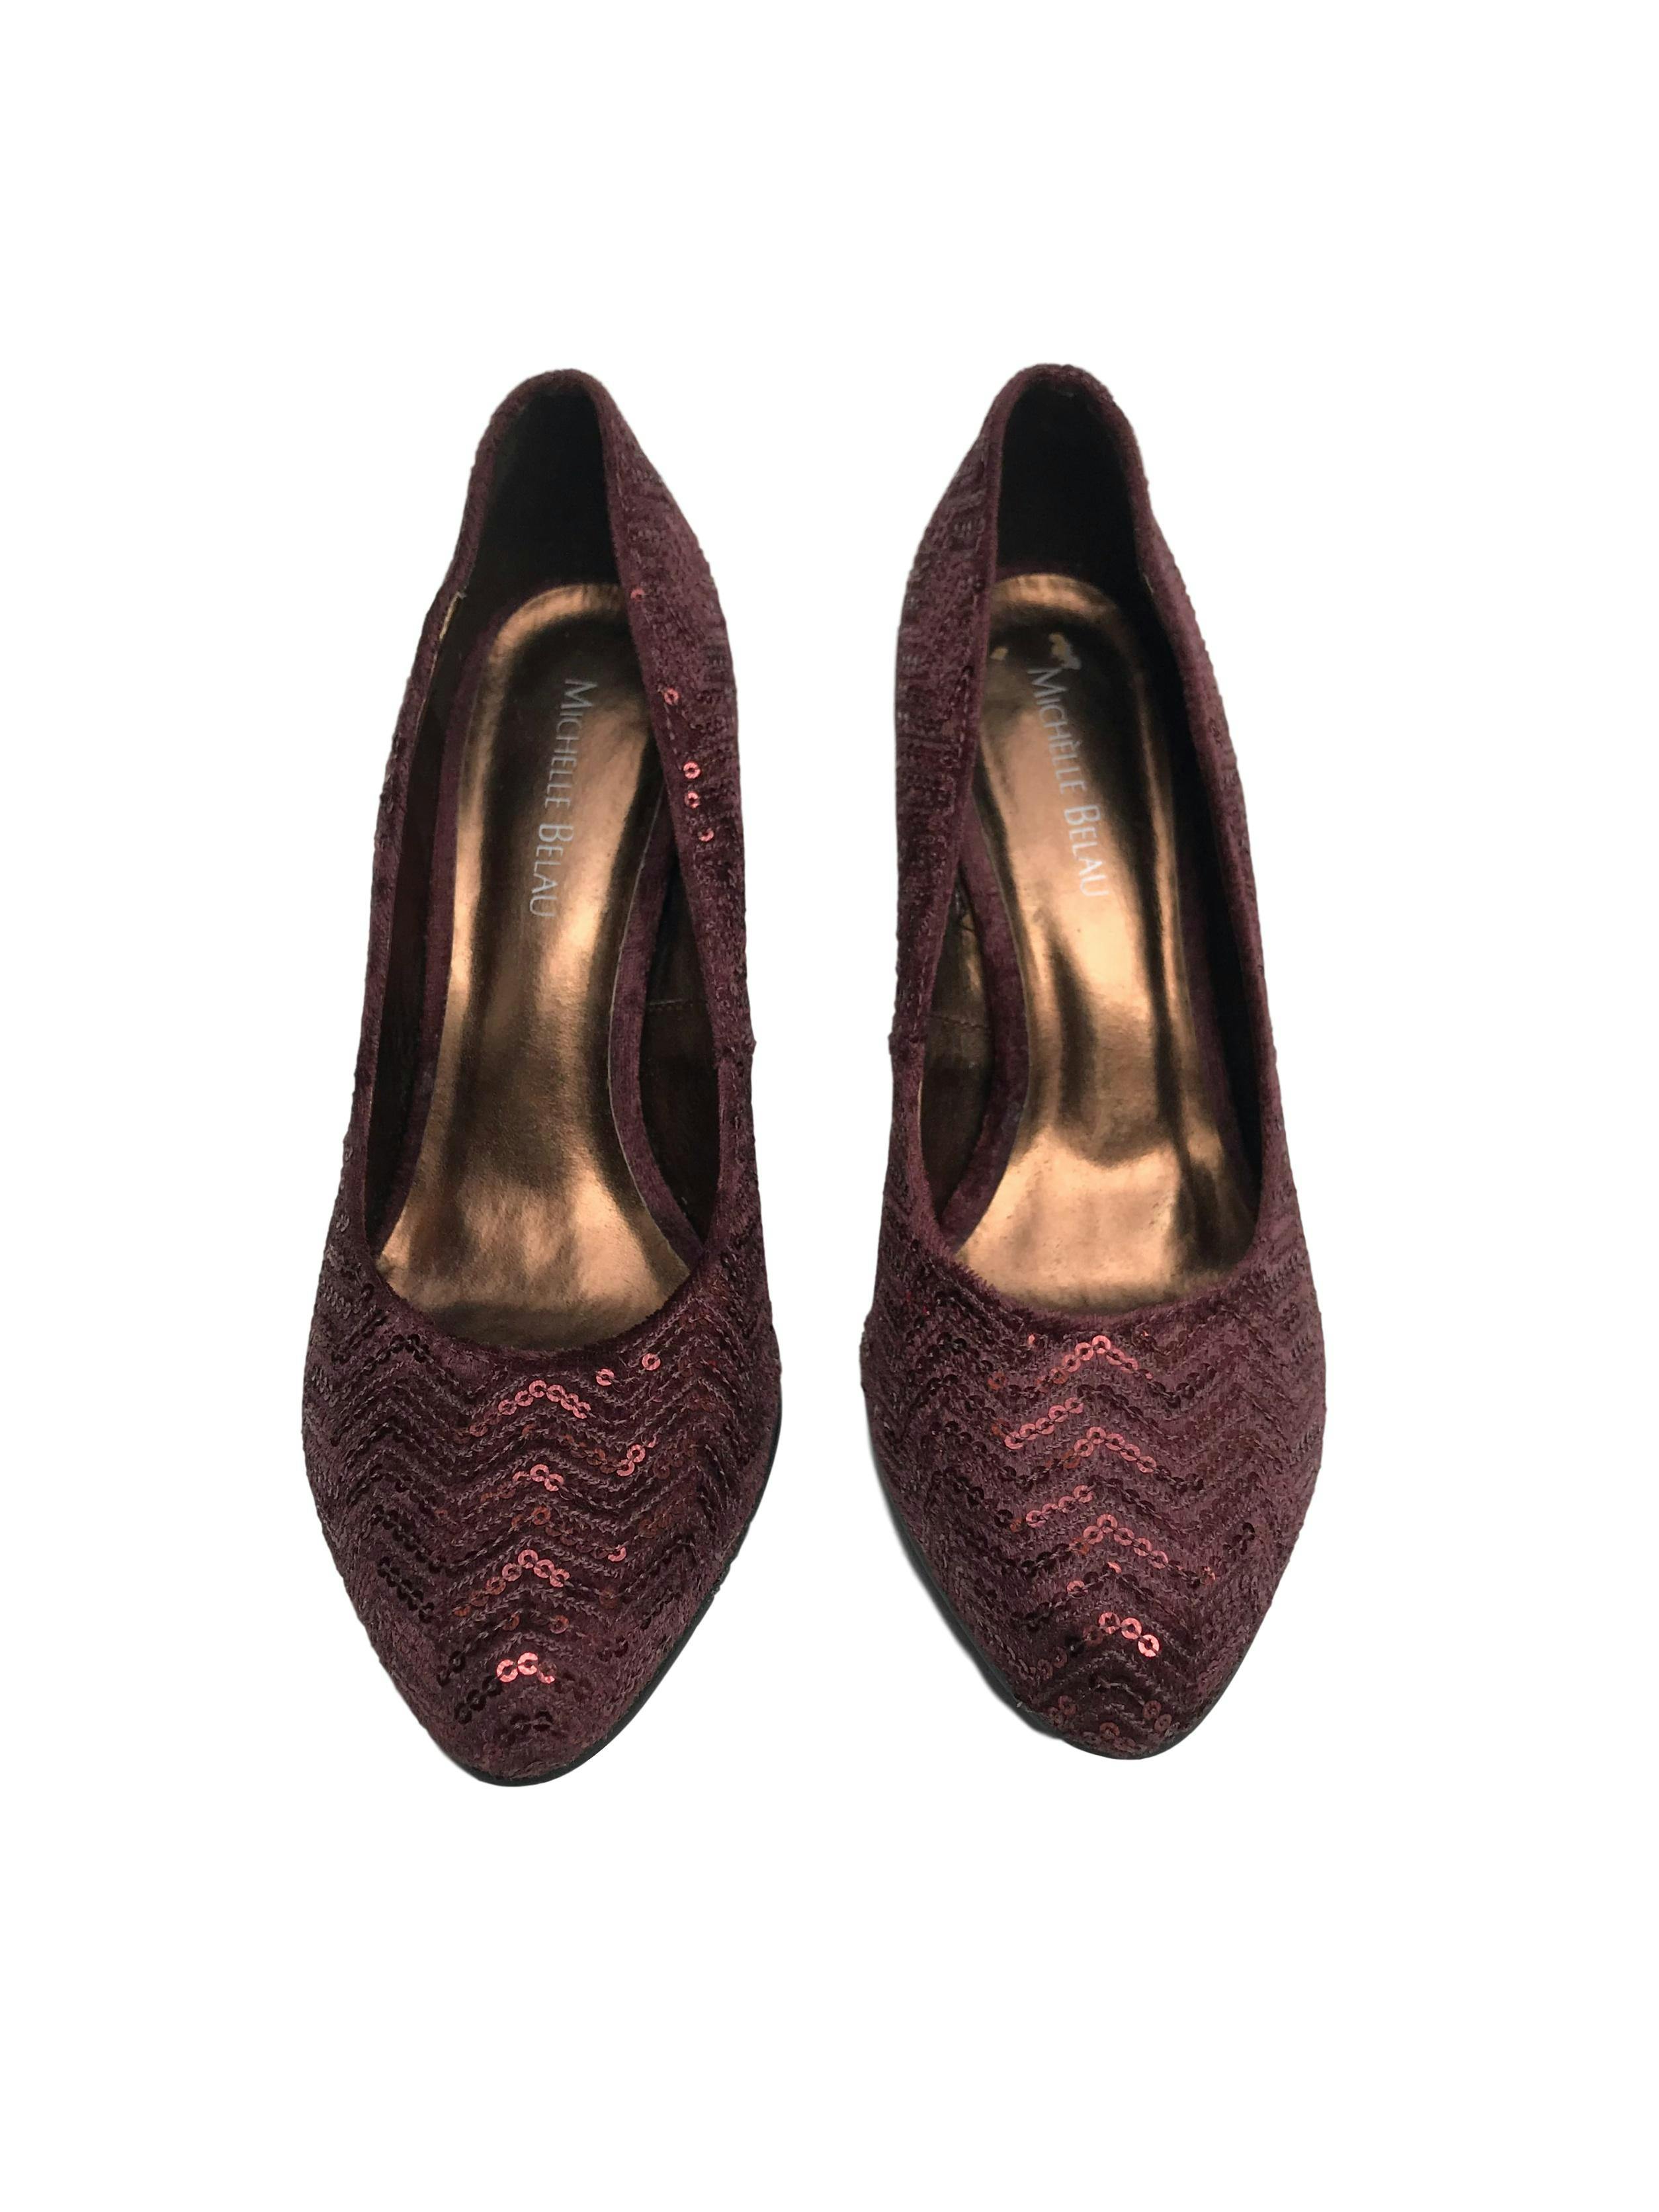 Zapatos Michelle Belau de textil guinda con mostacillas, taco 9cm. Estado 9/10